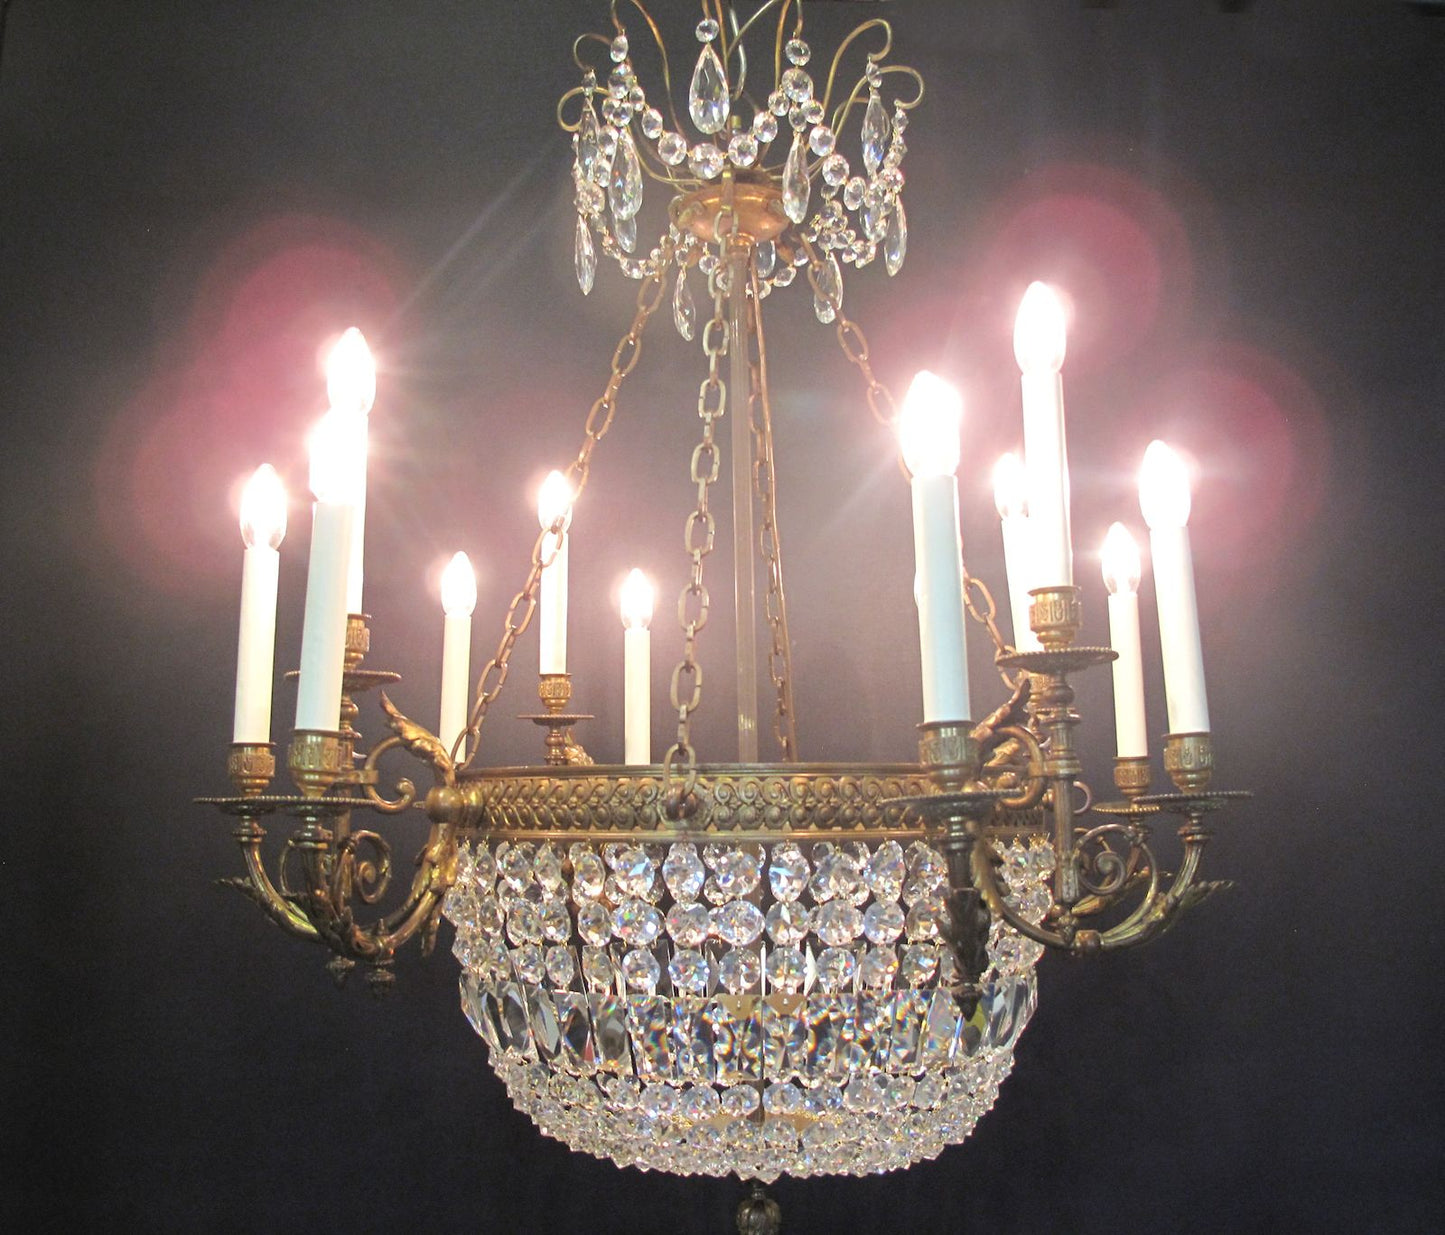 12 light ormolu and glass chandelier, lit up